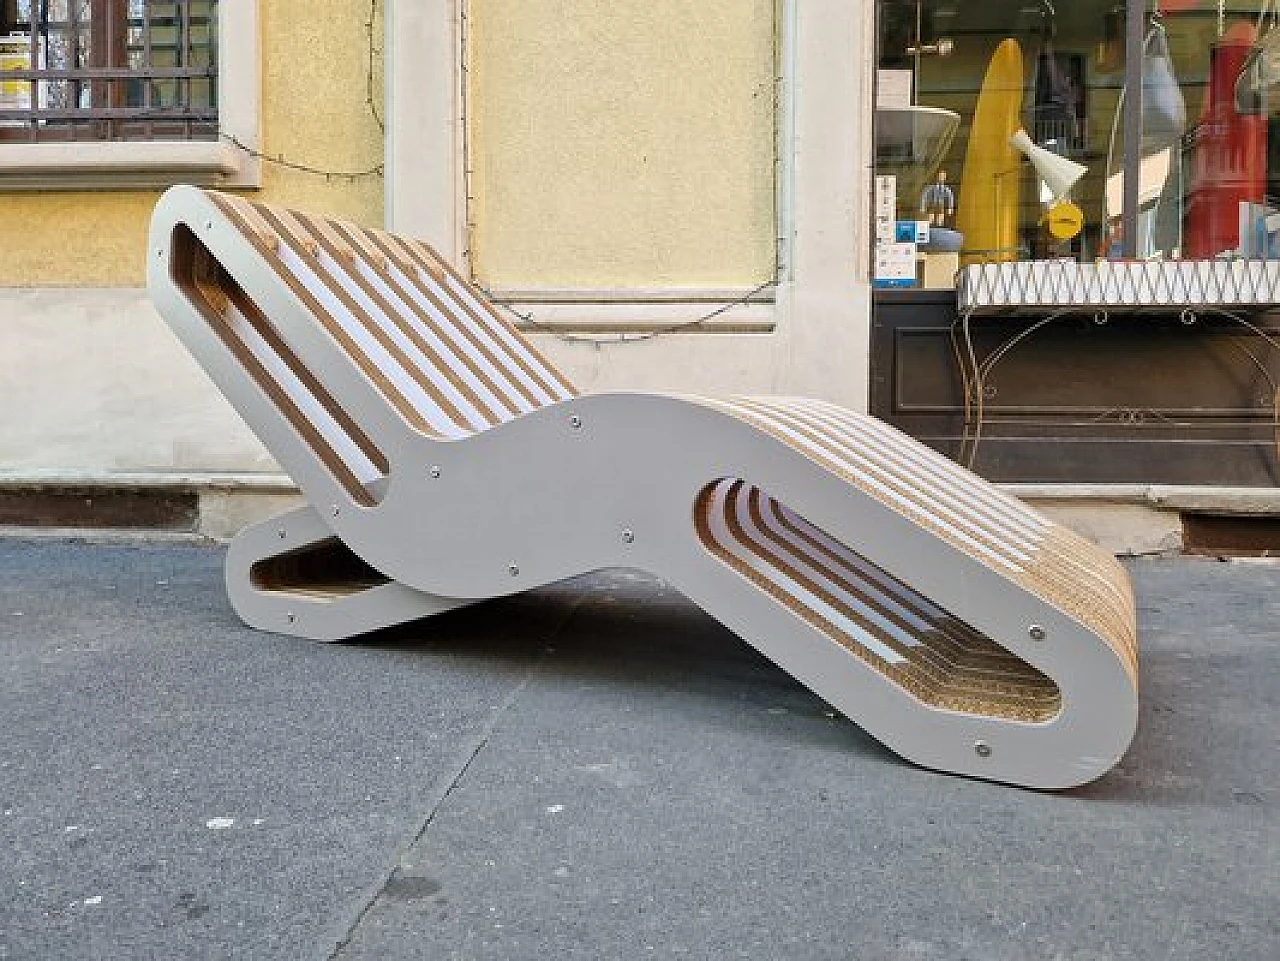 2Onde chaise longue by Giorgio Camporaso for Lessmore 3